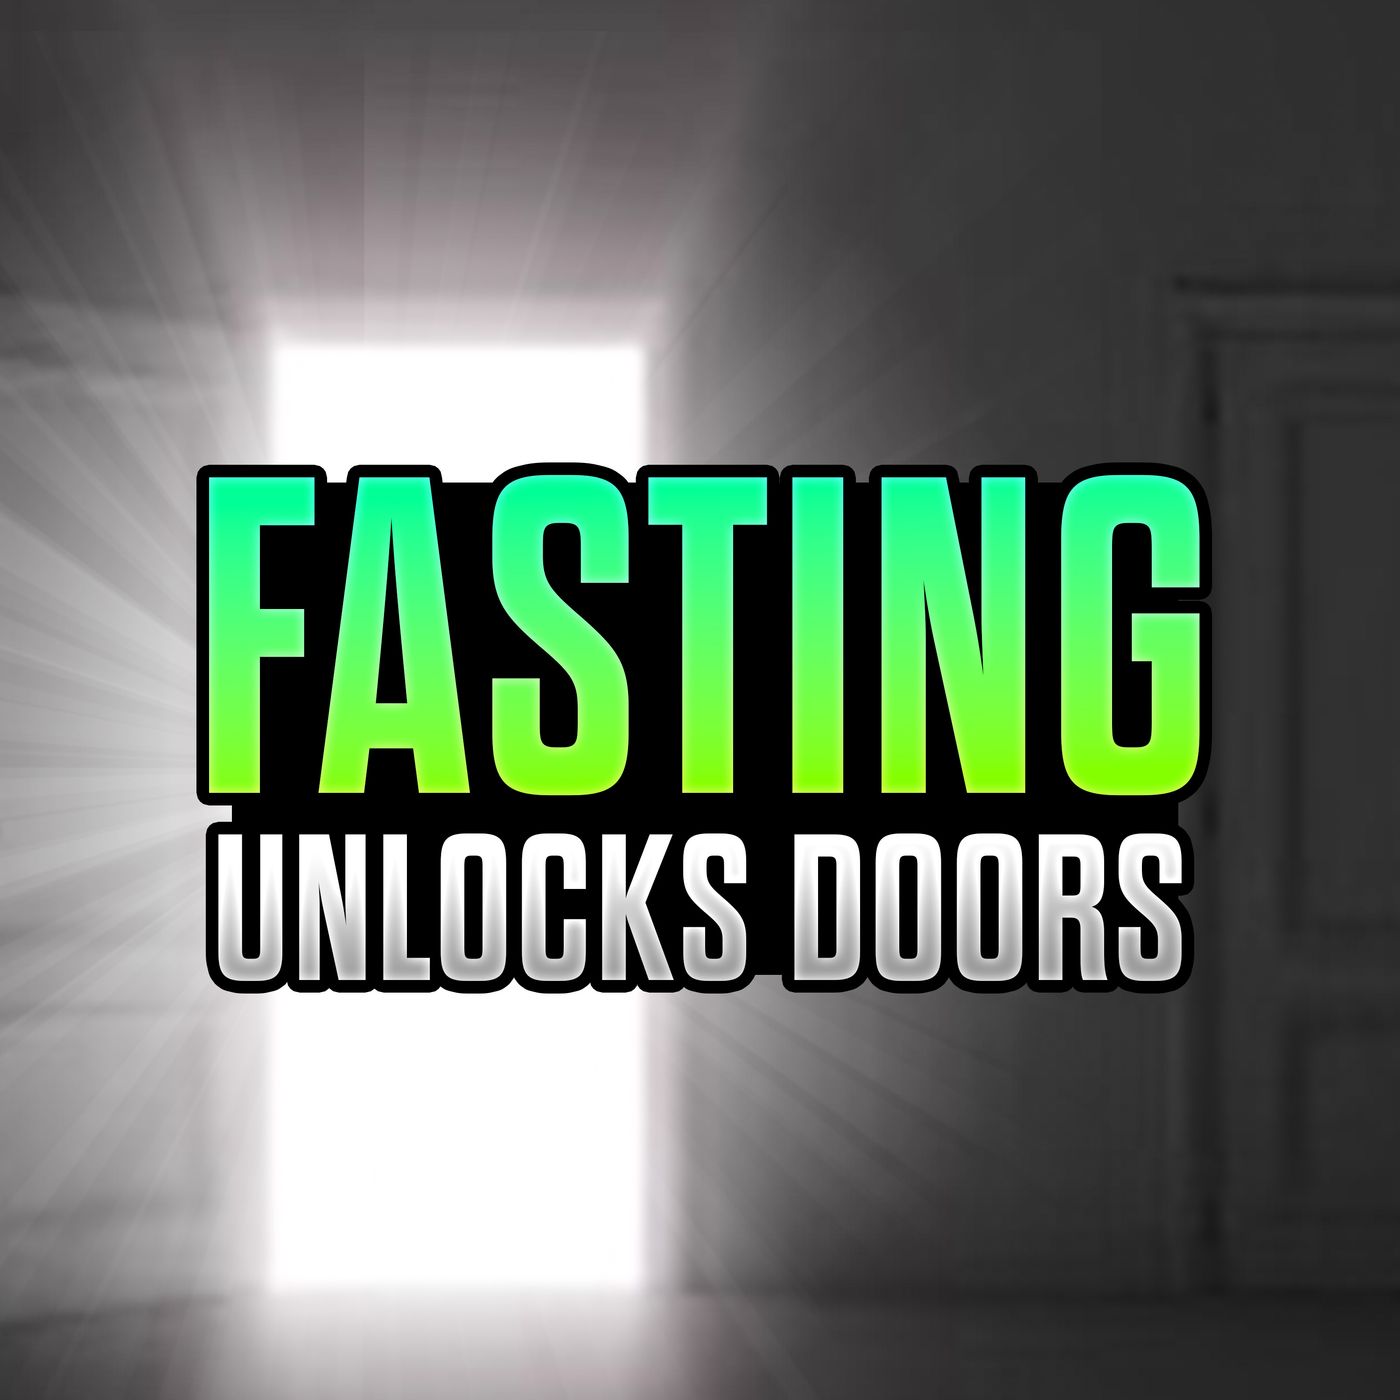 21 Day Fast- Day 13 - Fasting Unlocks Closed Doors